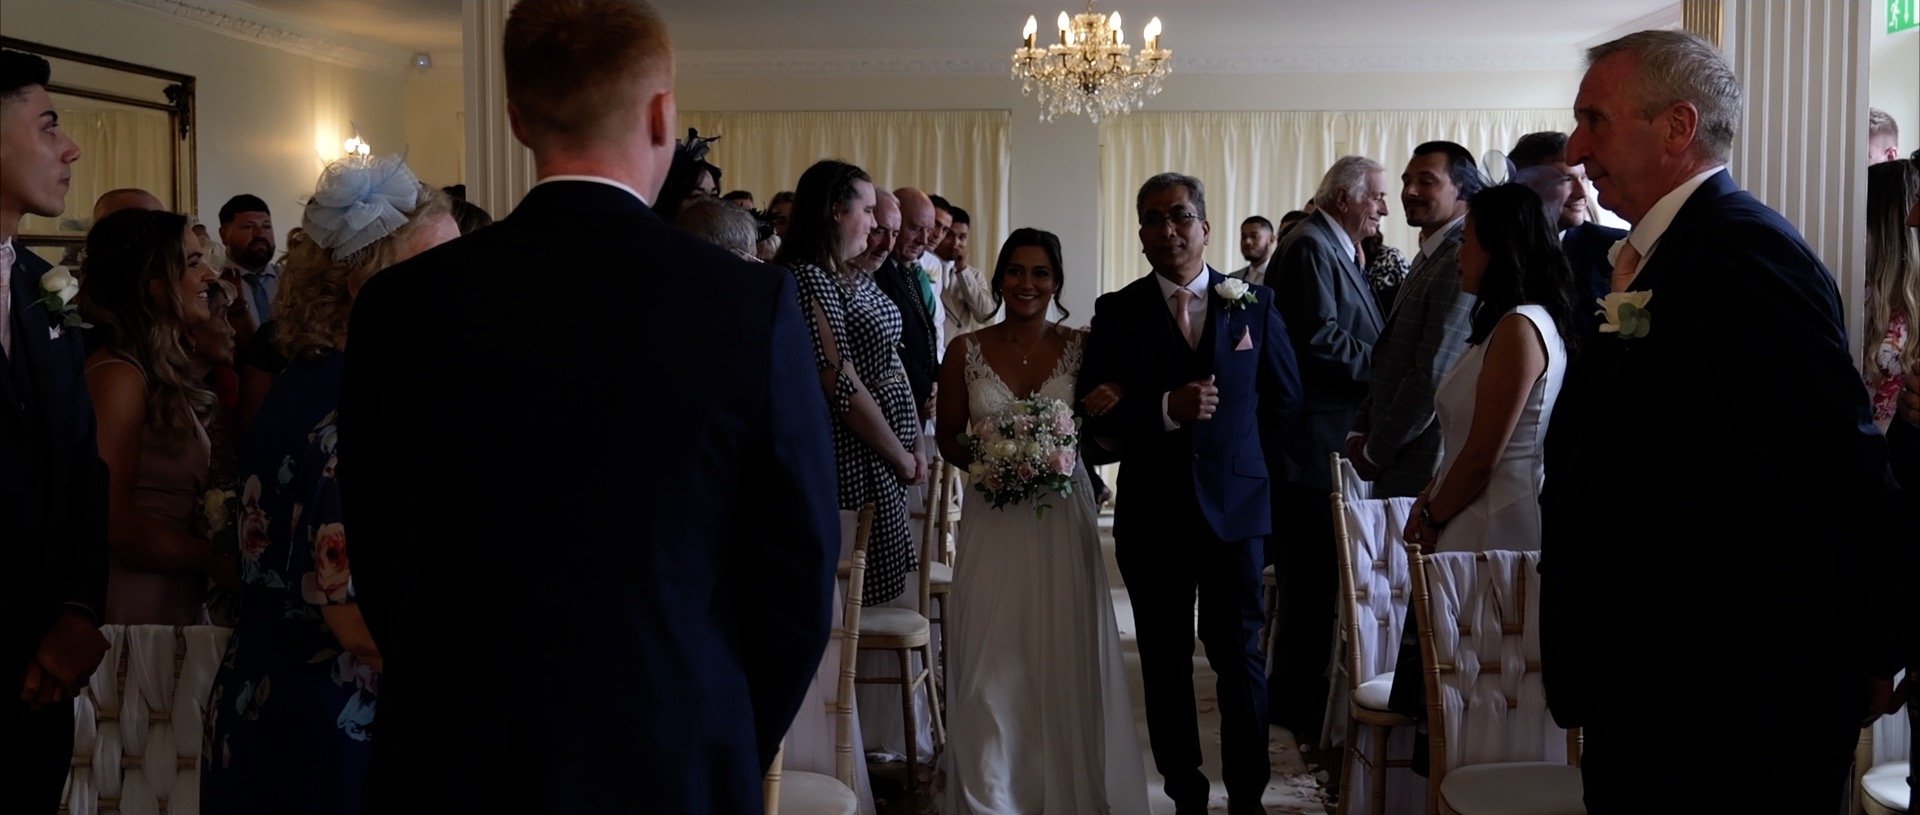 Bride walks down the Aisle at Quendon Hall - Essex wedding videos.jpg